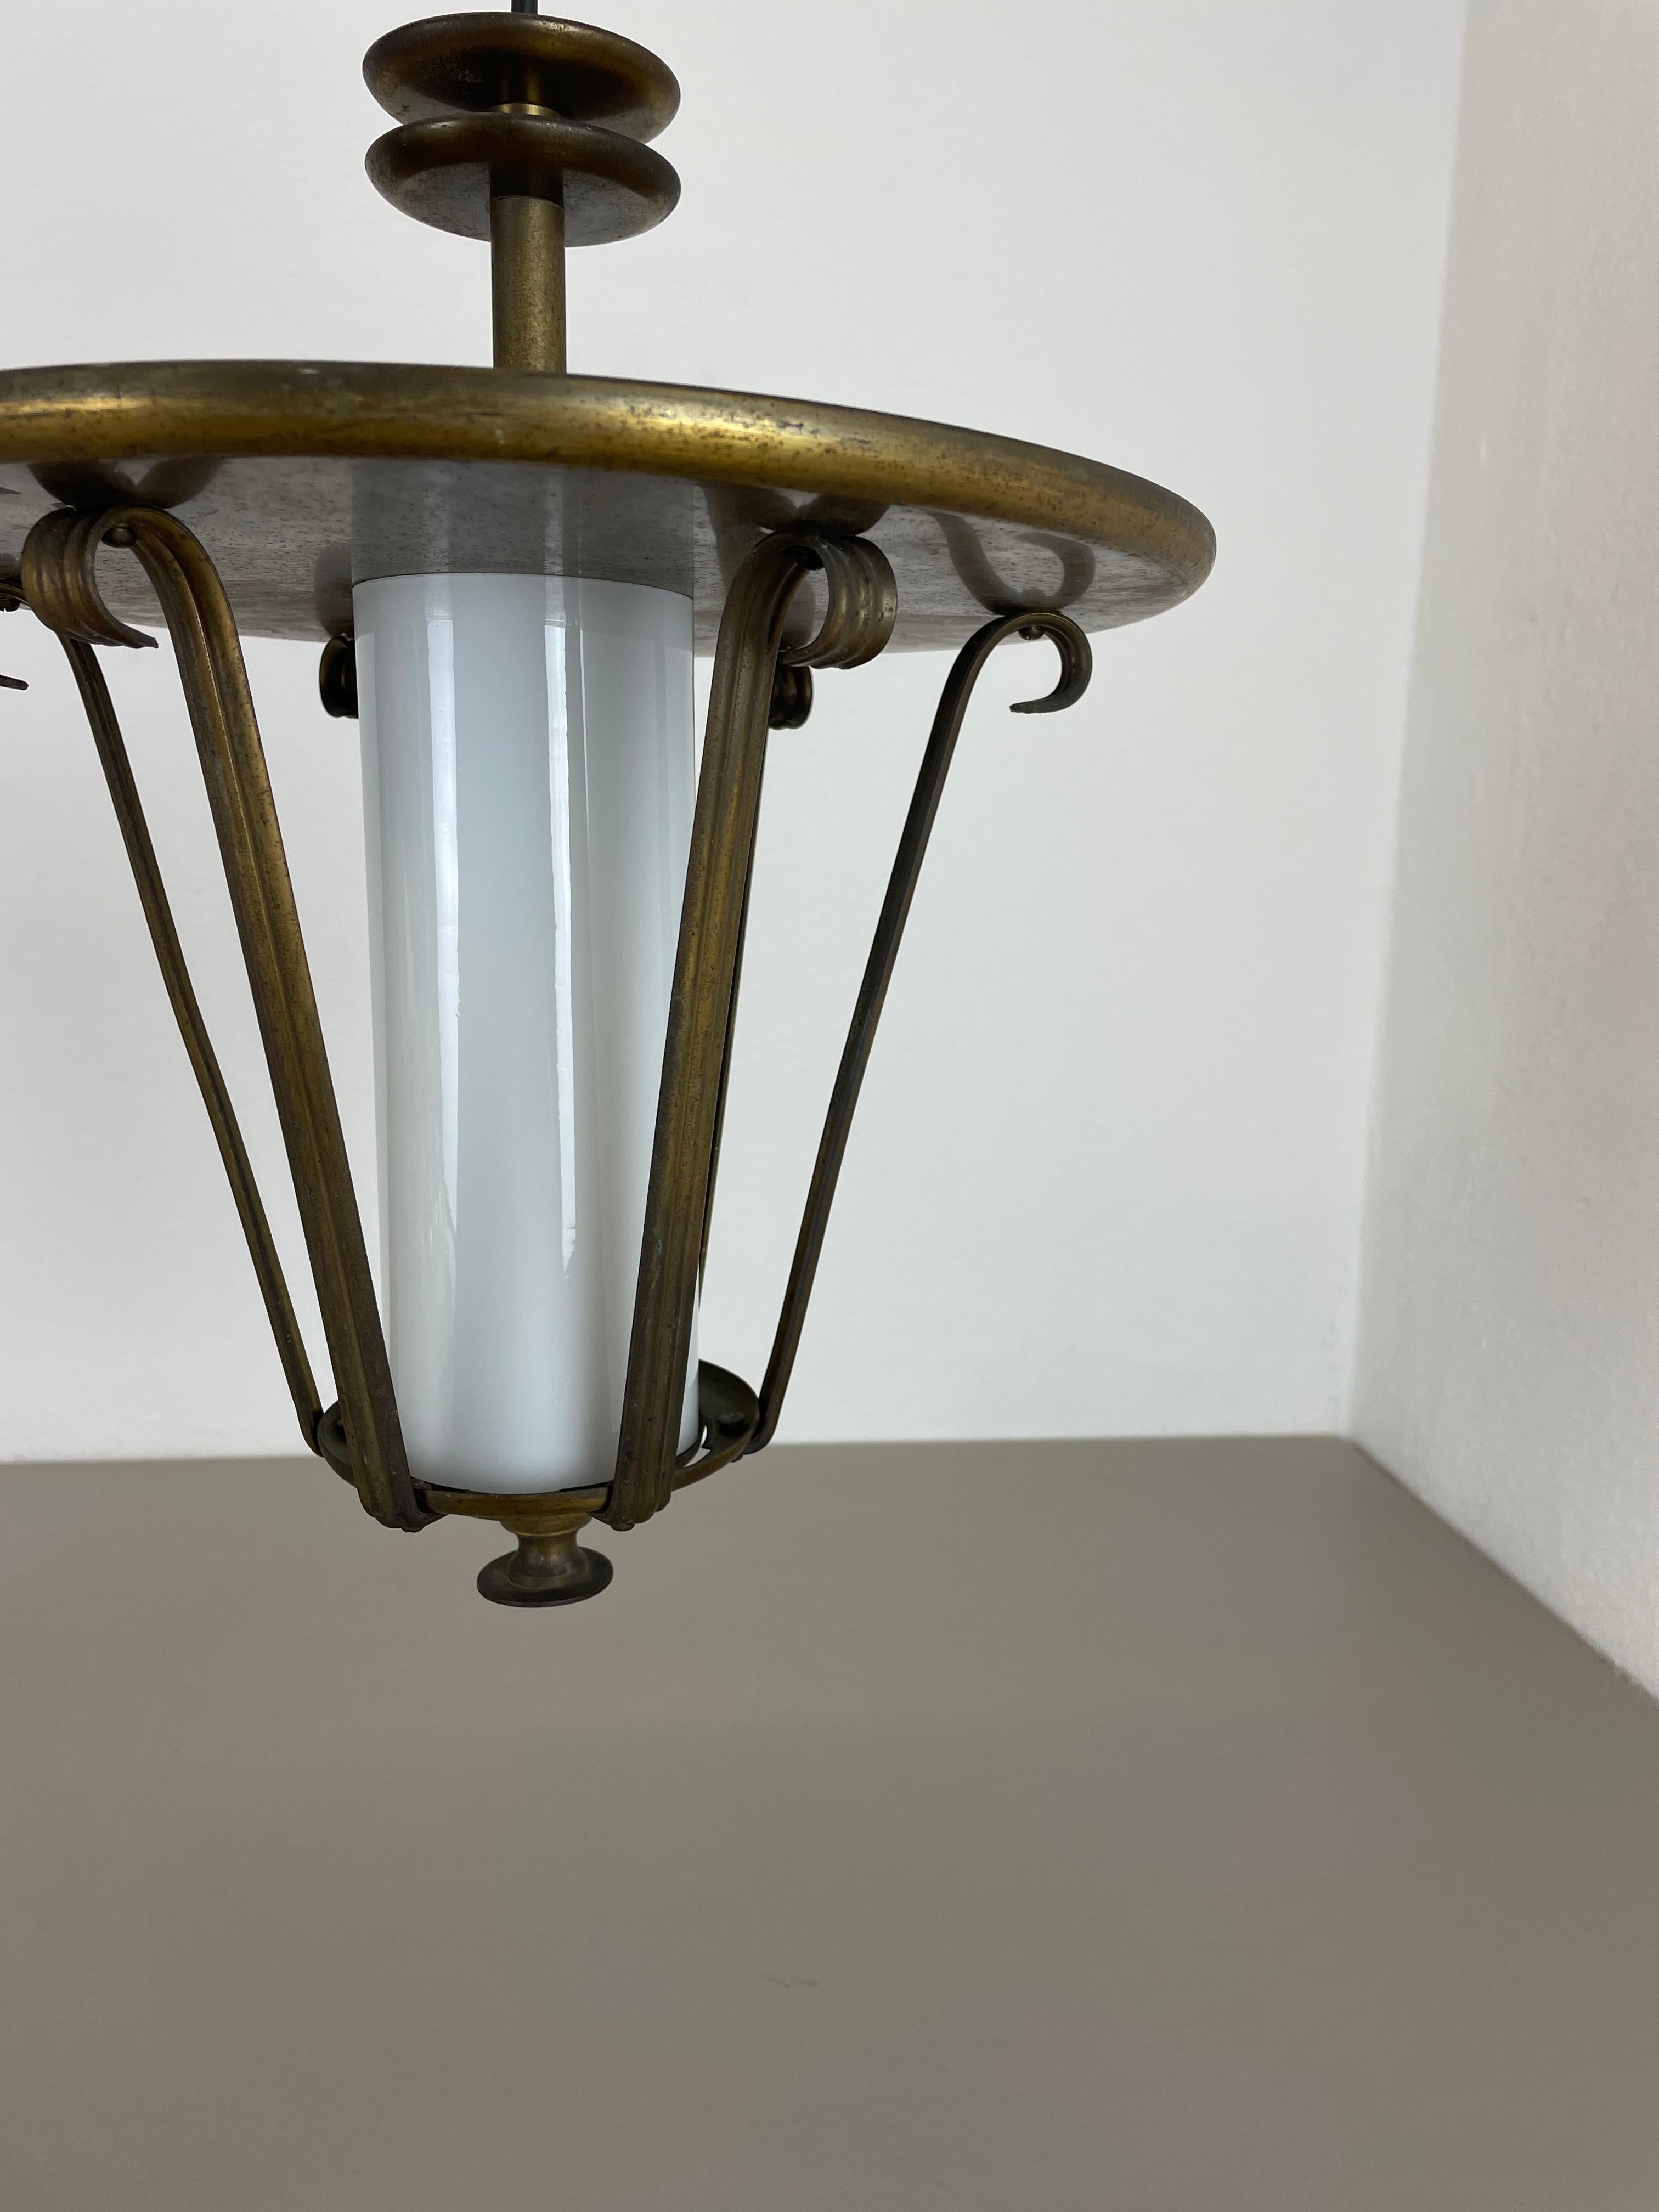 Midcentury Stilnovo Style Brass and Glass Tube Hanging Lantern Light, Italy 1950 For Sale 1